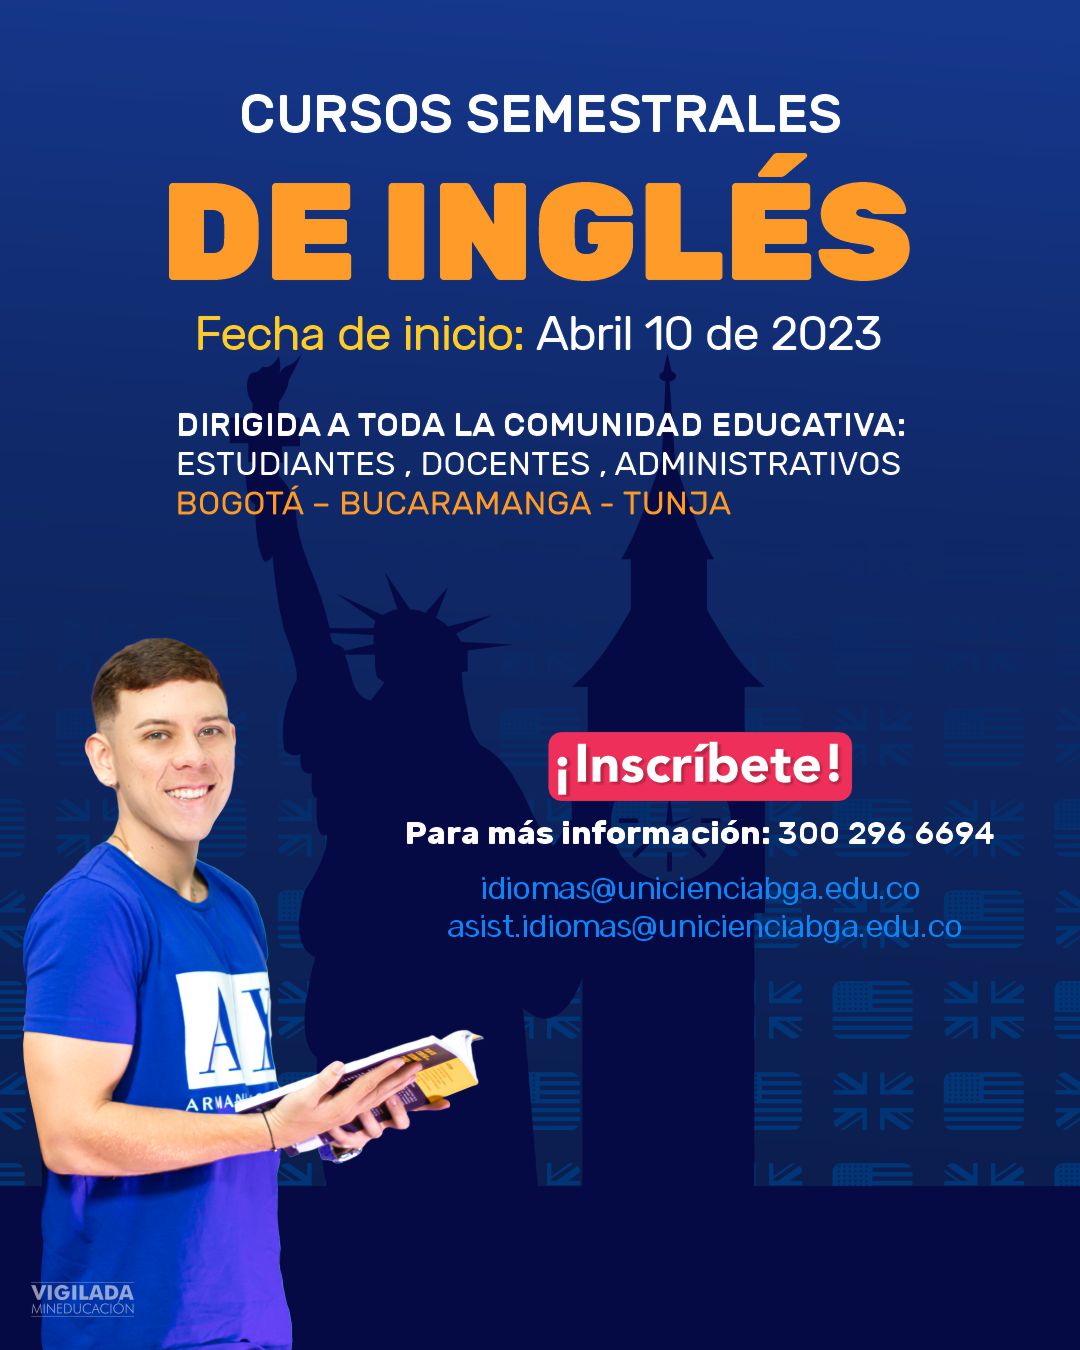 Cursos semestrales de inglés - Abril 2023 | UNICIENCIA